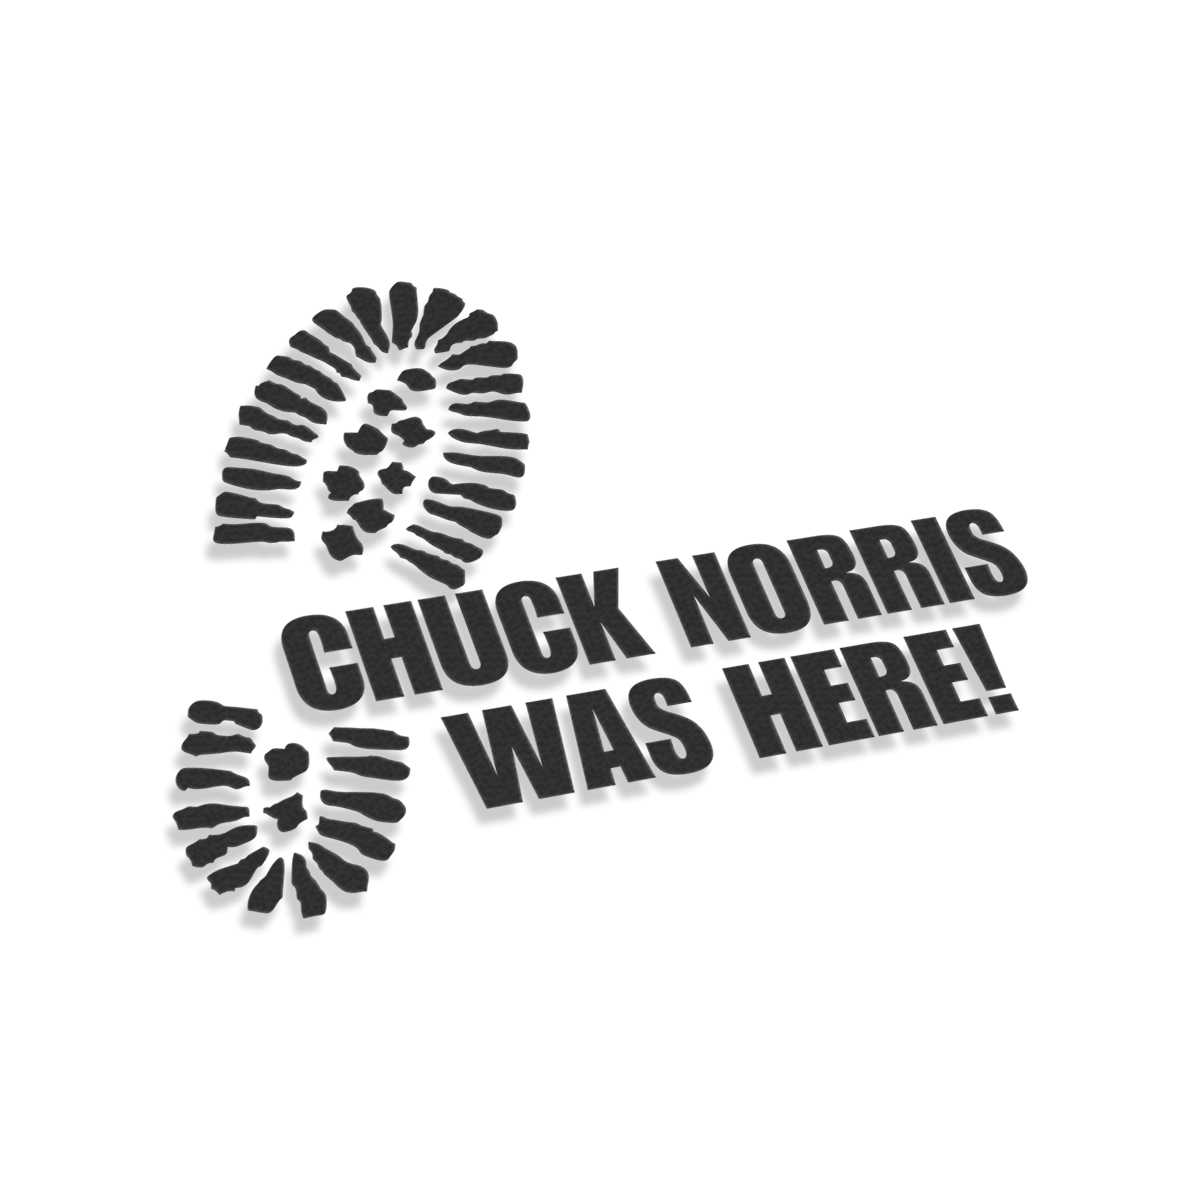 SUPERSTICKI Chuck Norris was here ca 20cm Auto Aufkleber Bike Motorrad Fun Tuning Decal aus Hochleistungsfolie Aufkleber Autoaufkleber Tuningaufkleber Hochleistungsfolie für alle glatten Flä 